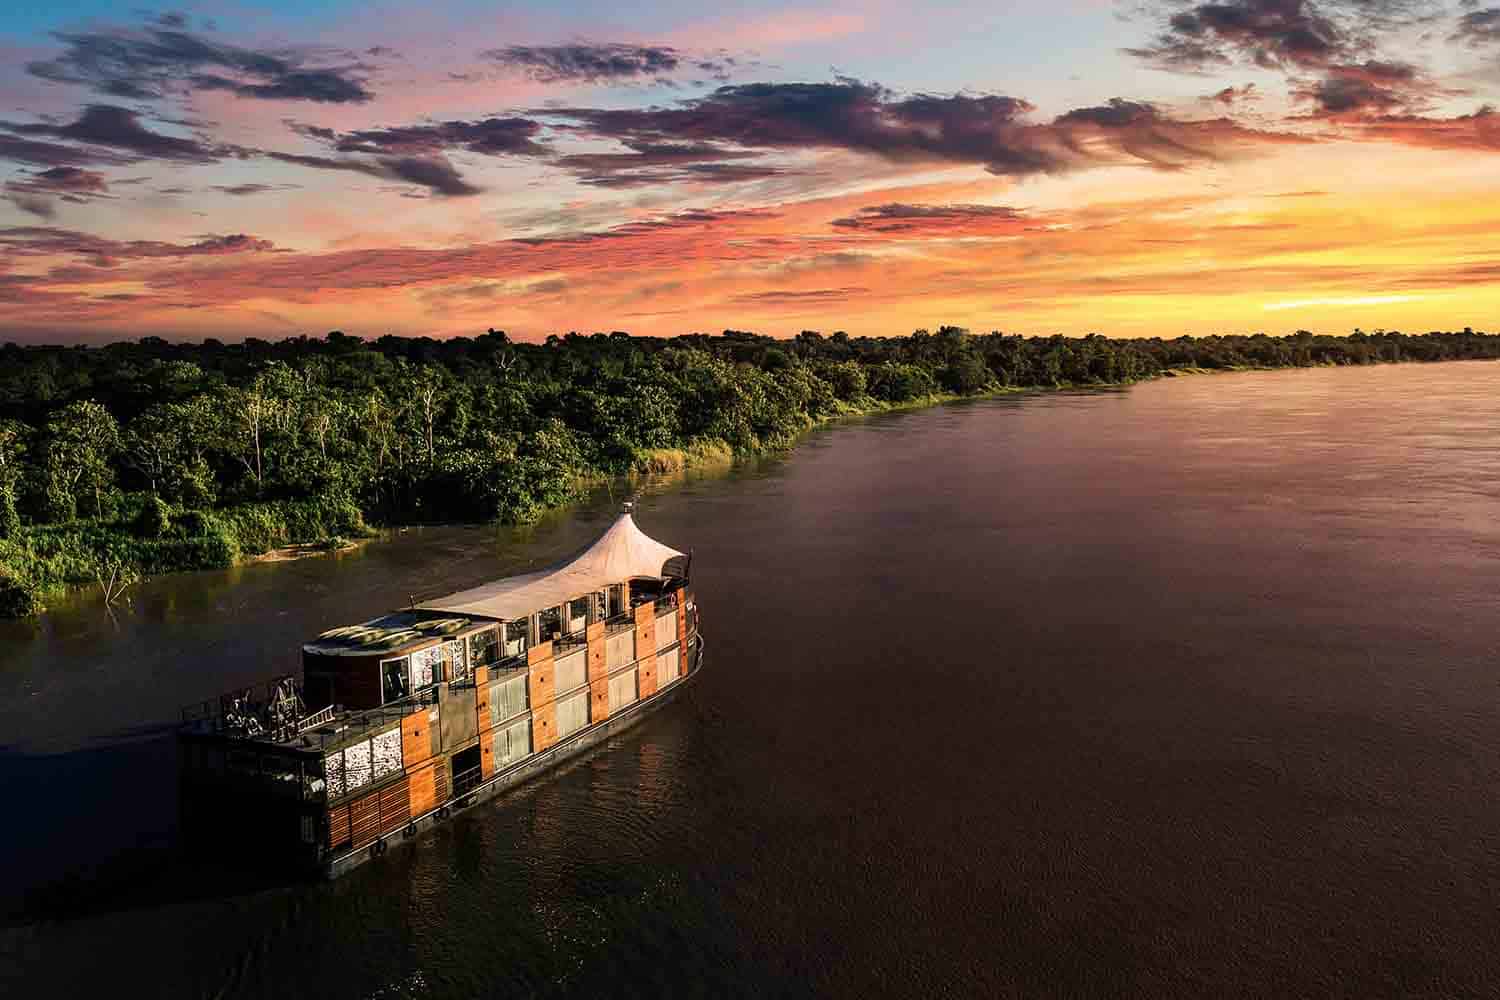 Cruise the River Amazon